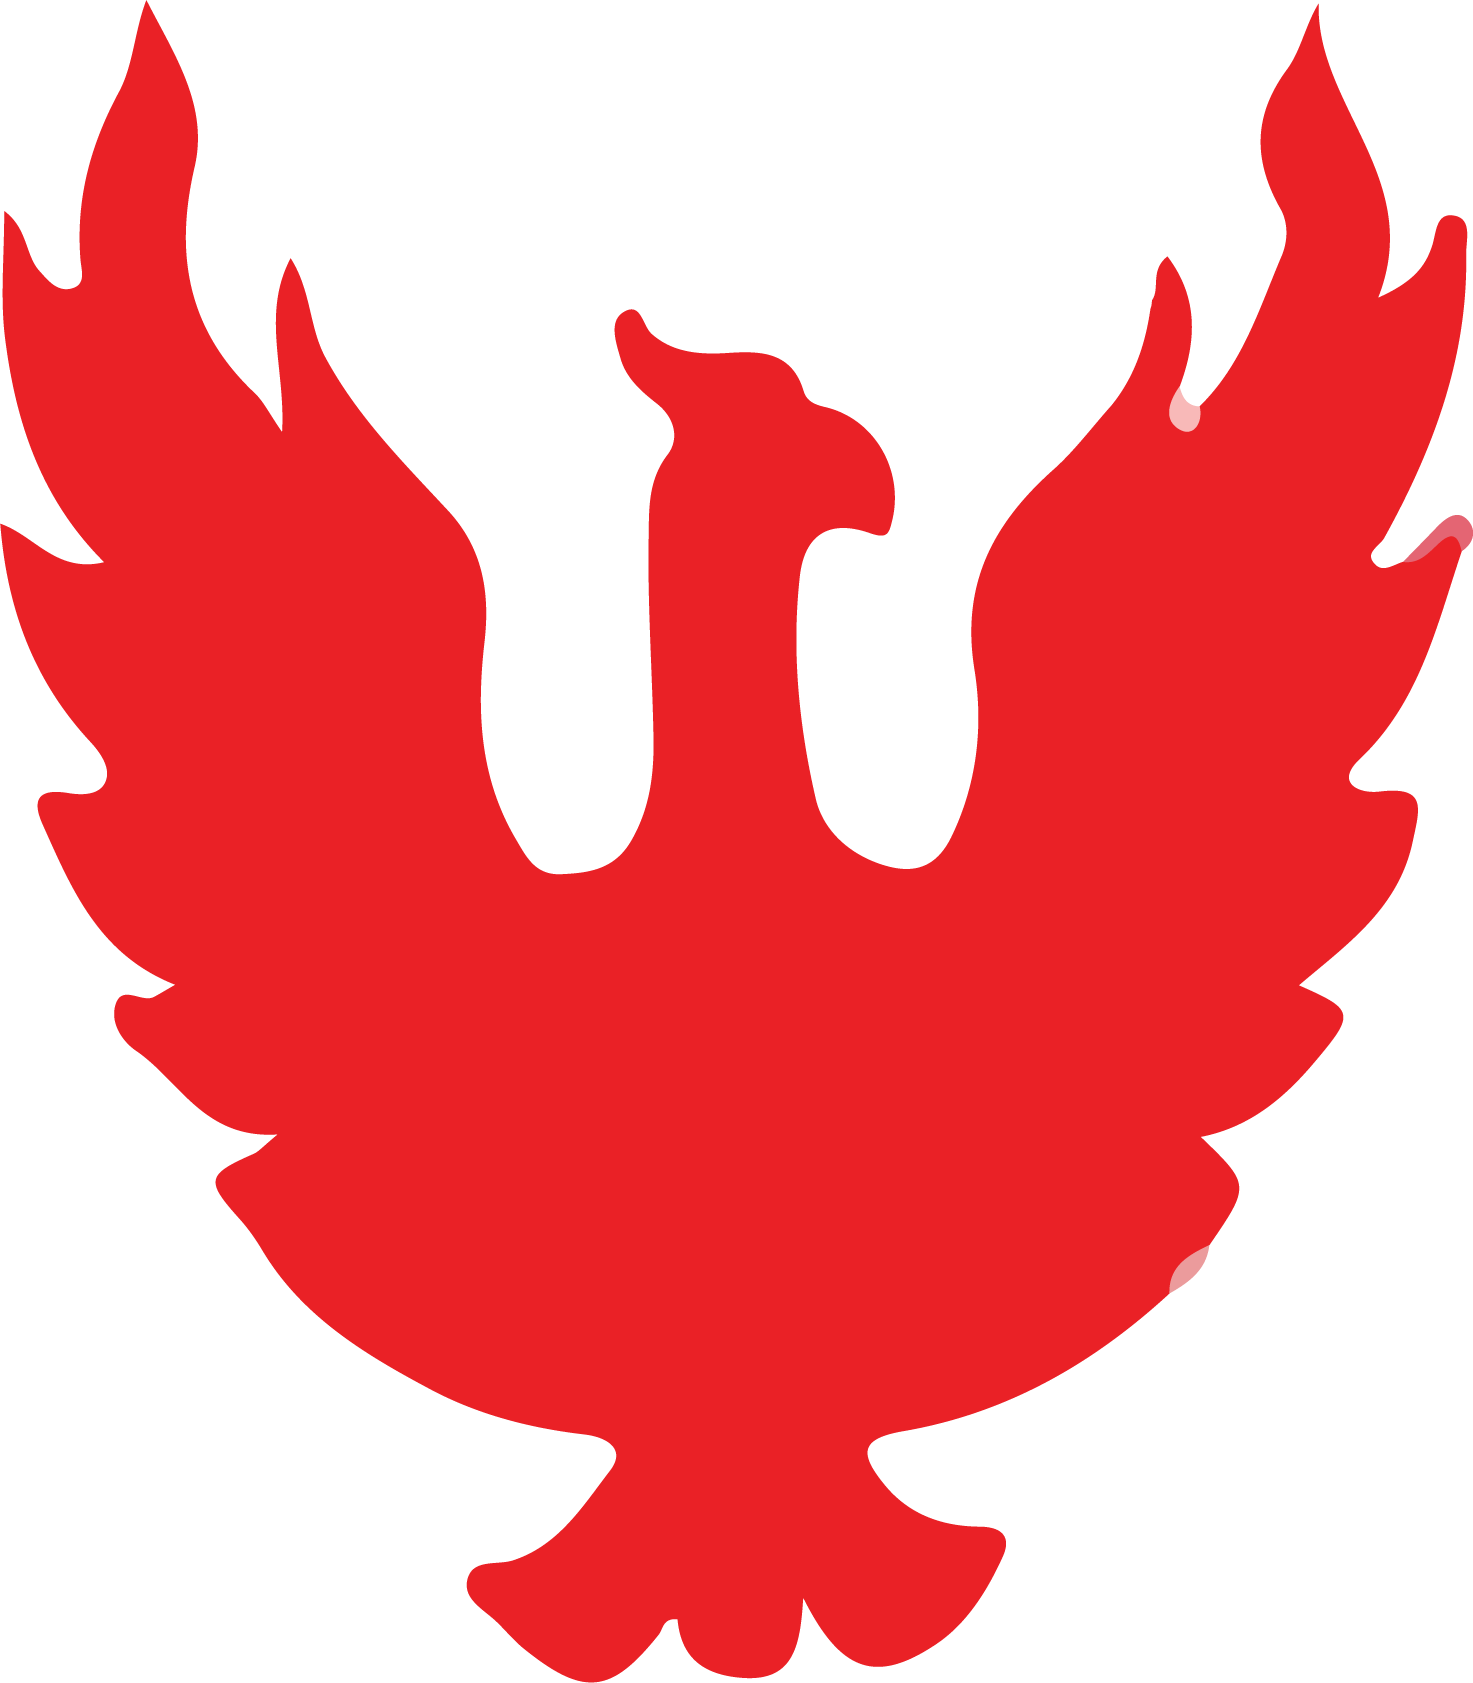 Phoenix Mills logo in transparent PNG format